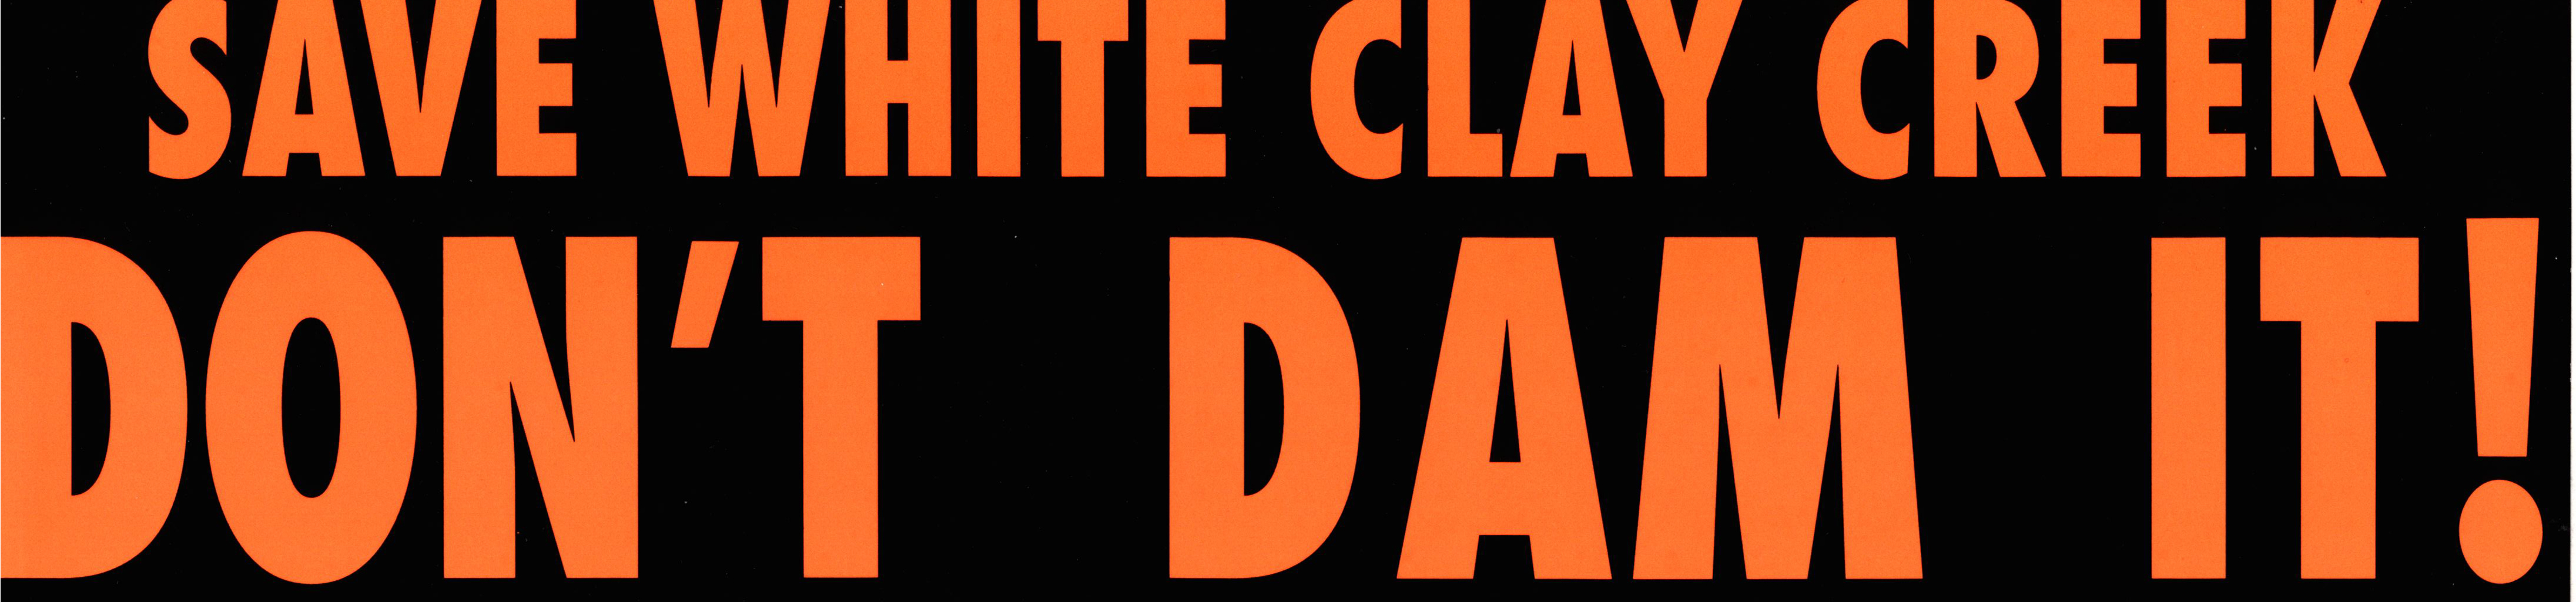 “Save White Clay Creek, Don’t Dam It!” bumper sticker